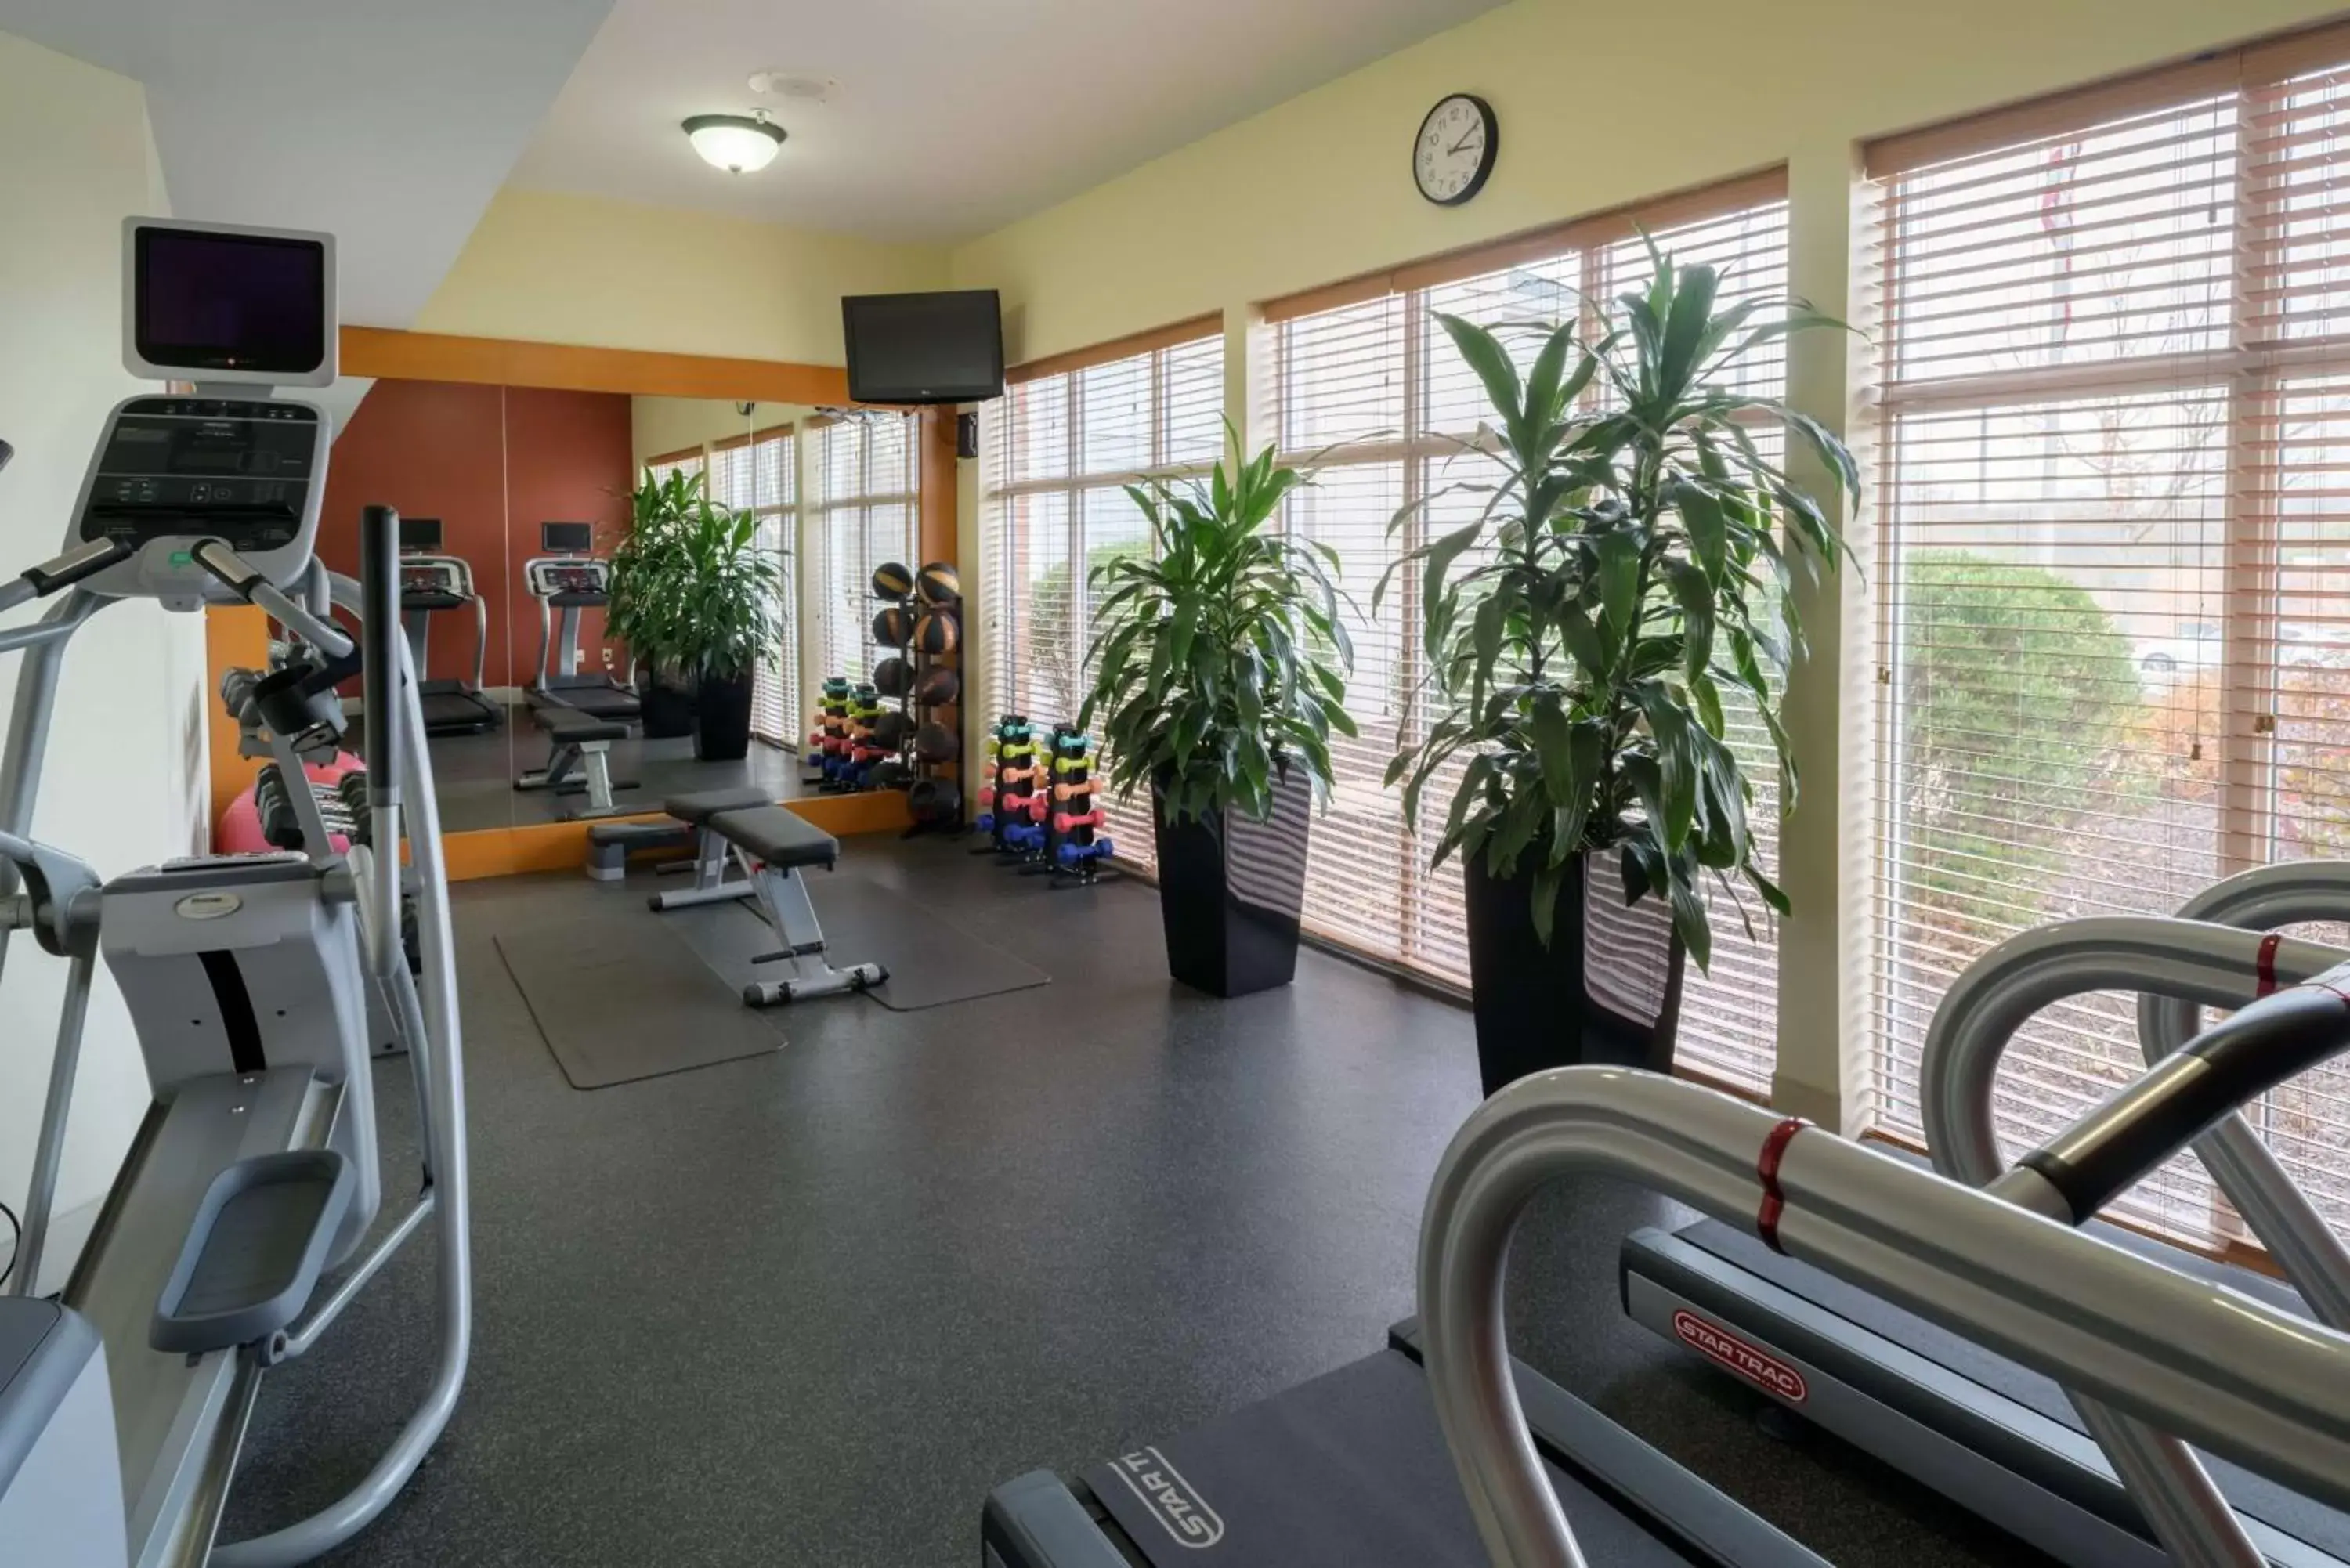 Fitness centre/facilities, Fitness Center/Facilities in Hilton Garden Inn Kennett Square